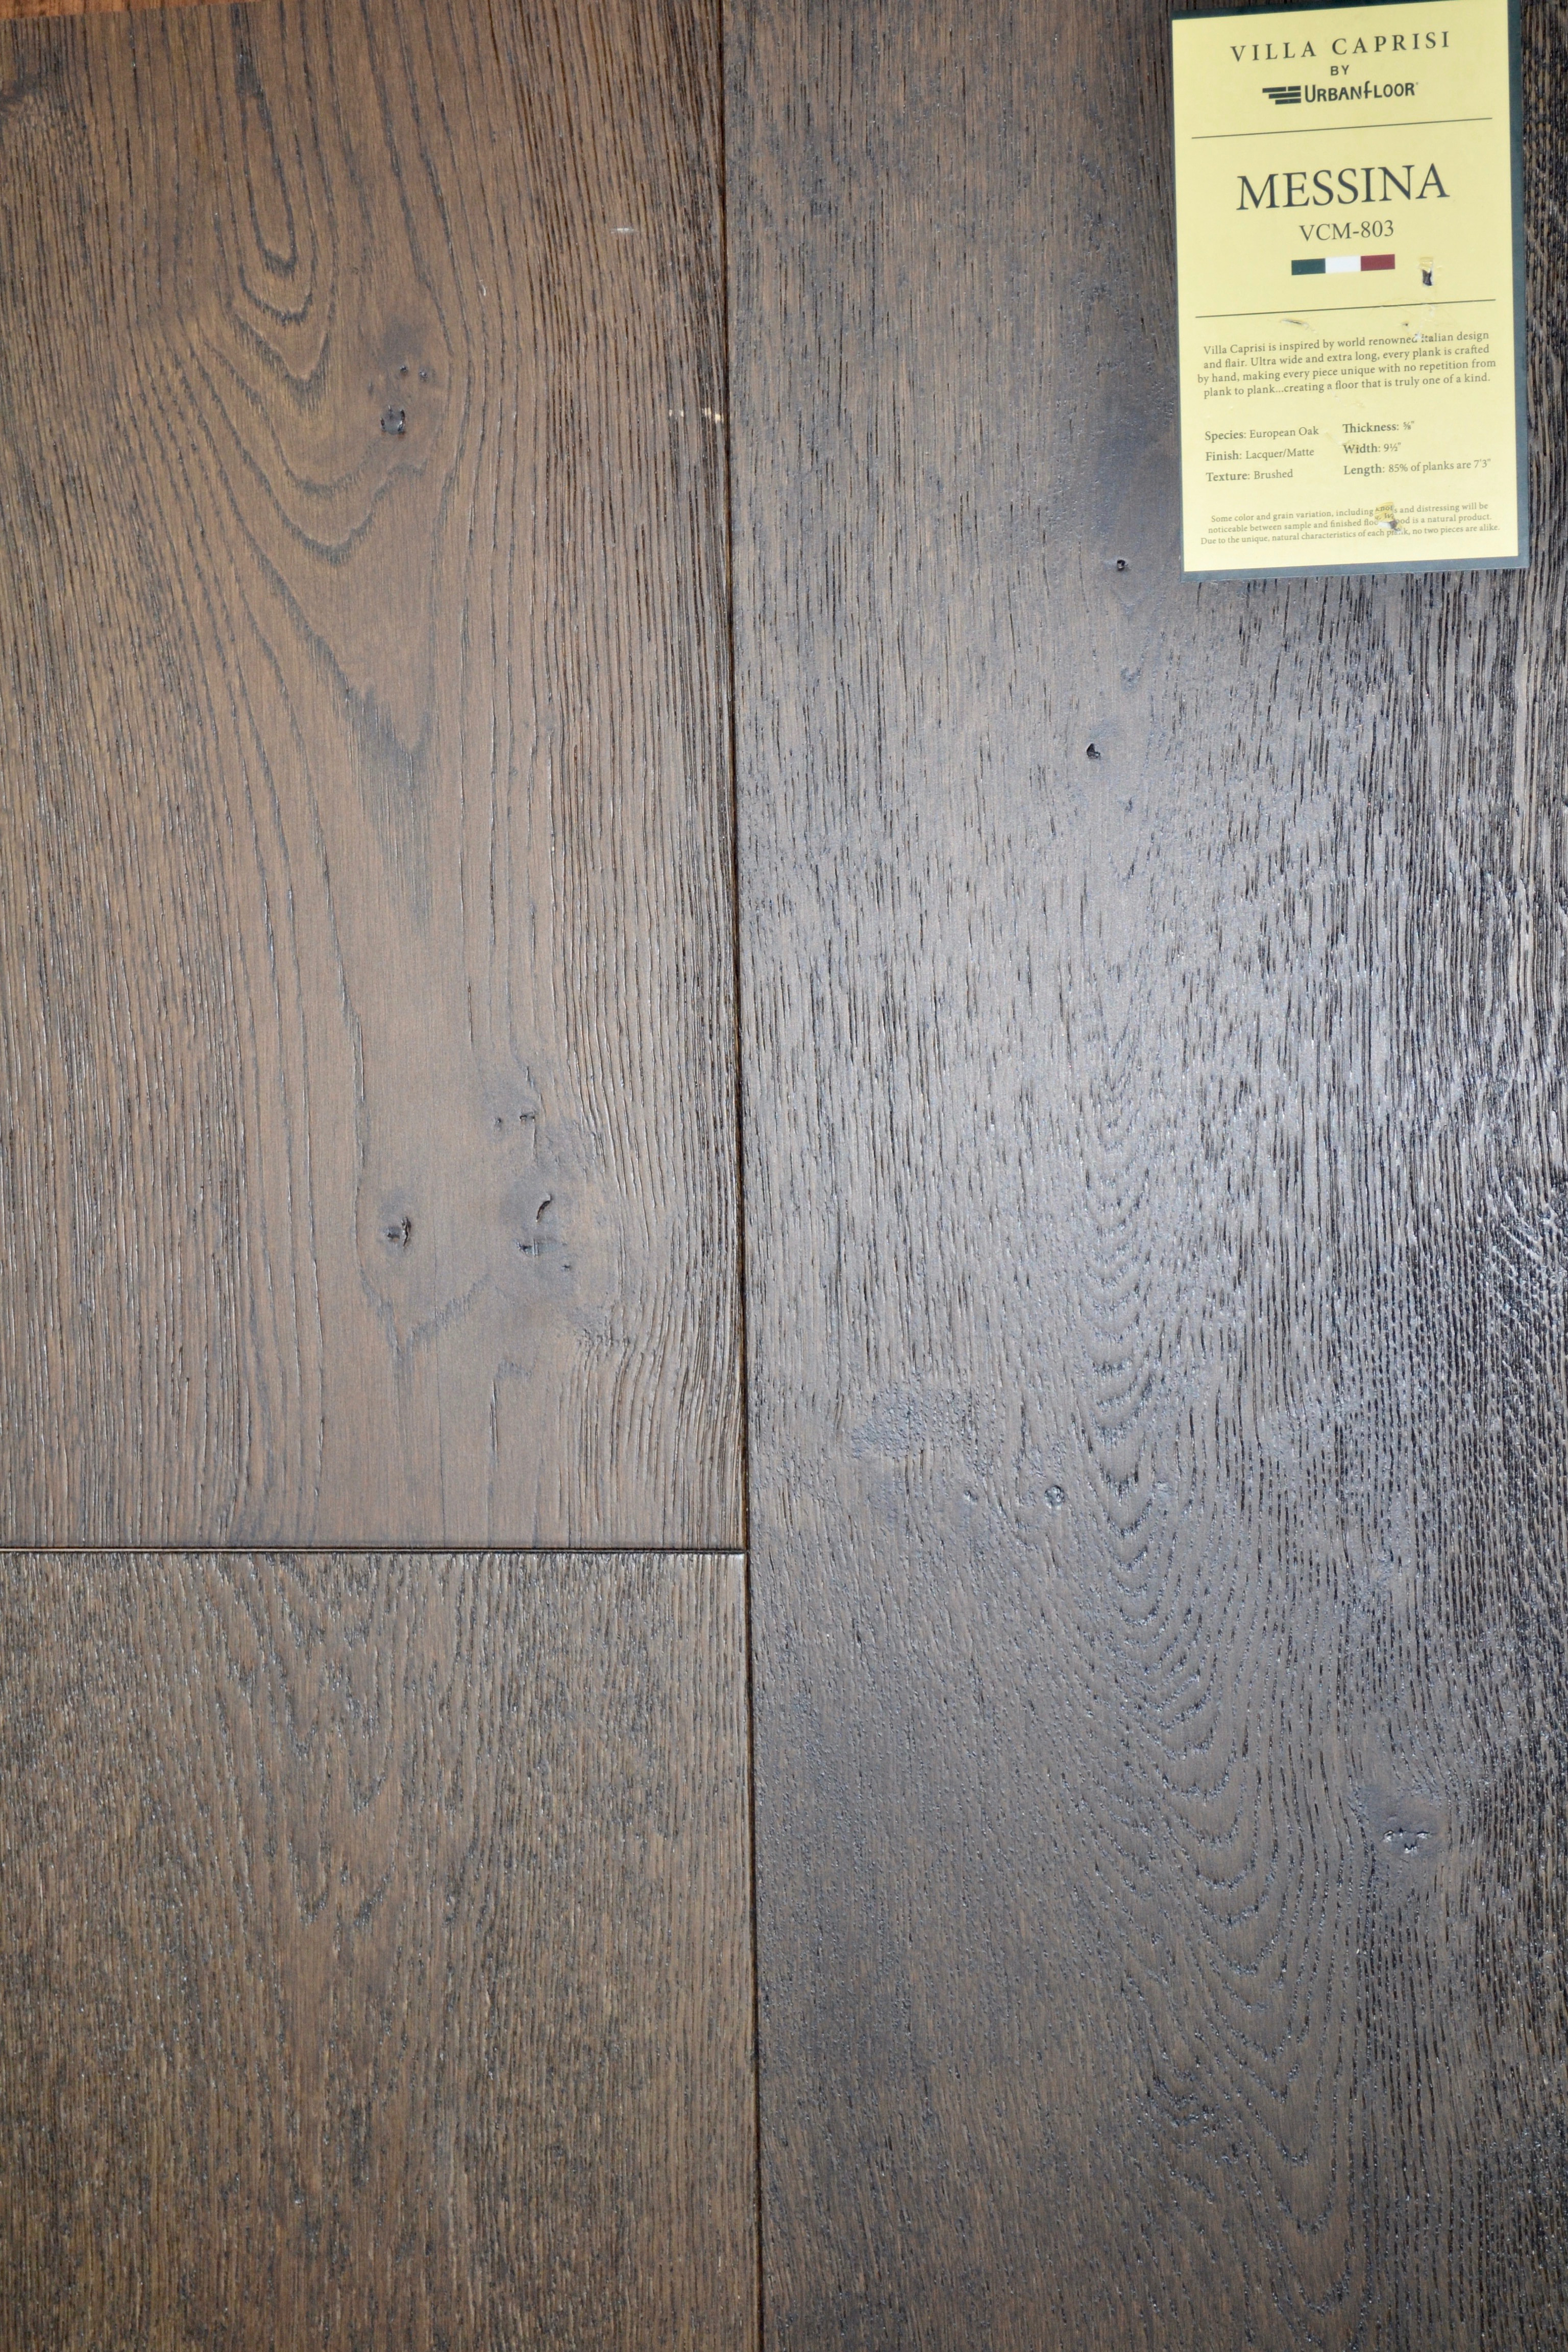 Popular Hardwood Floors 2017 Of Messina Villa Caprisi Millennium Hardwood Flooring Millennium Inside European Style Inspired Designer Oak Floor Messina by Villa Caprisi